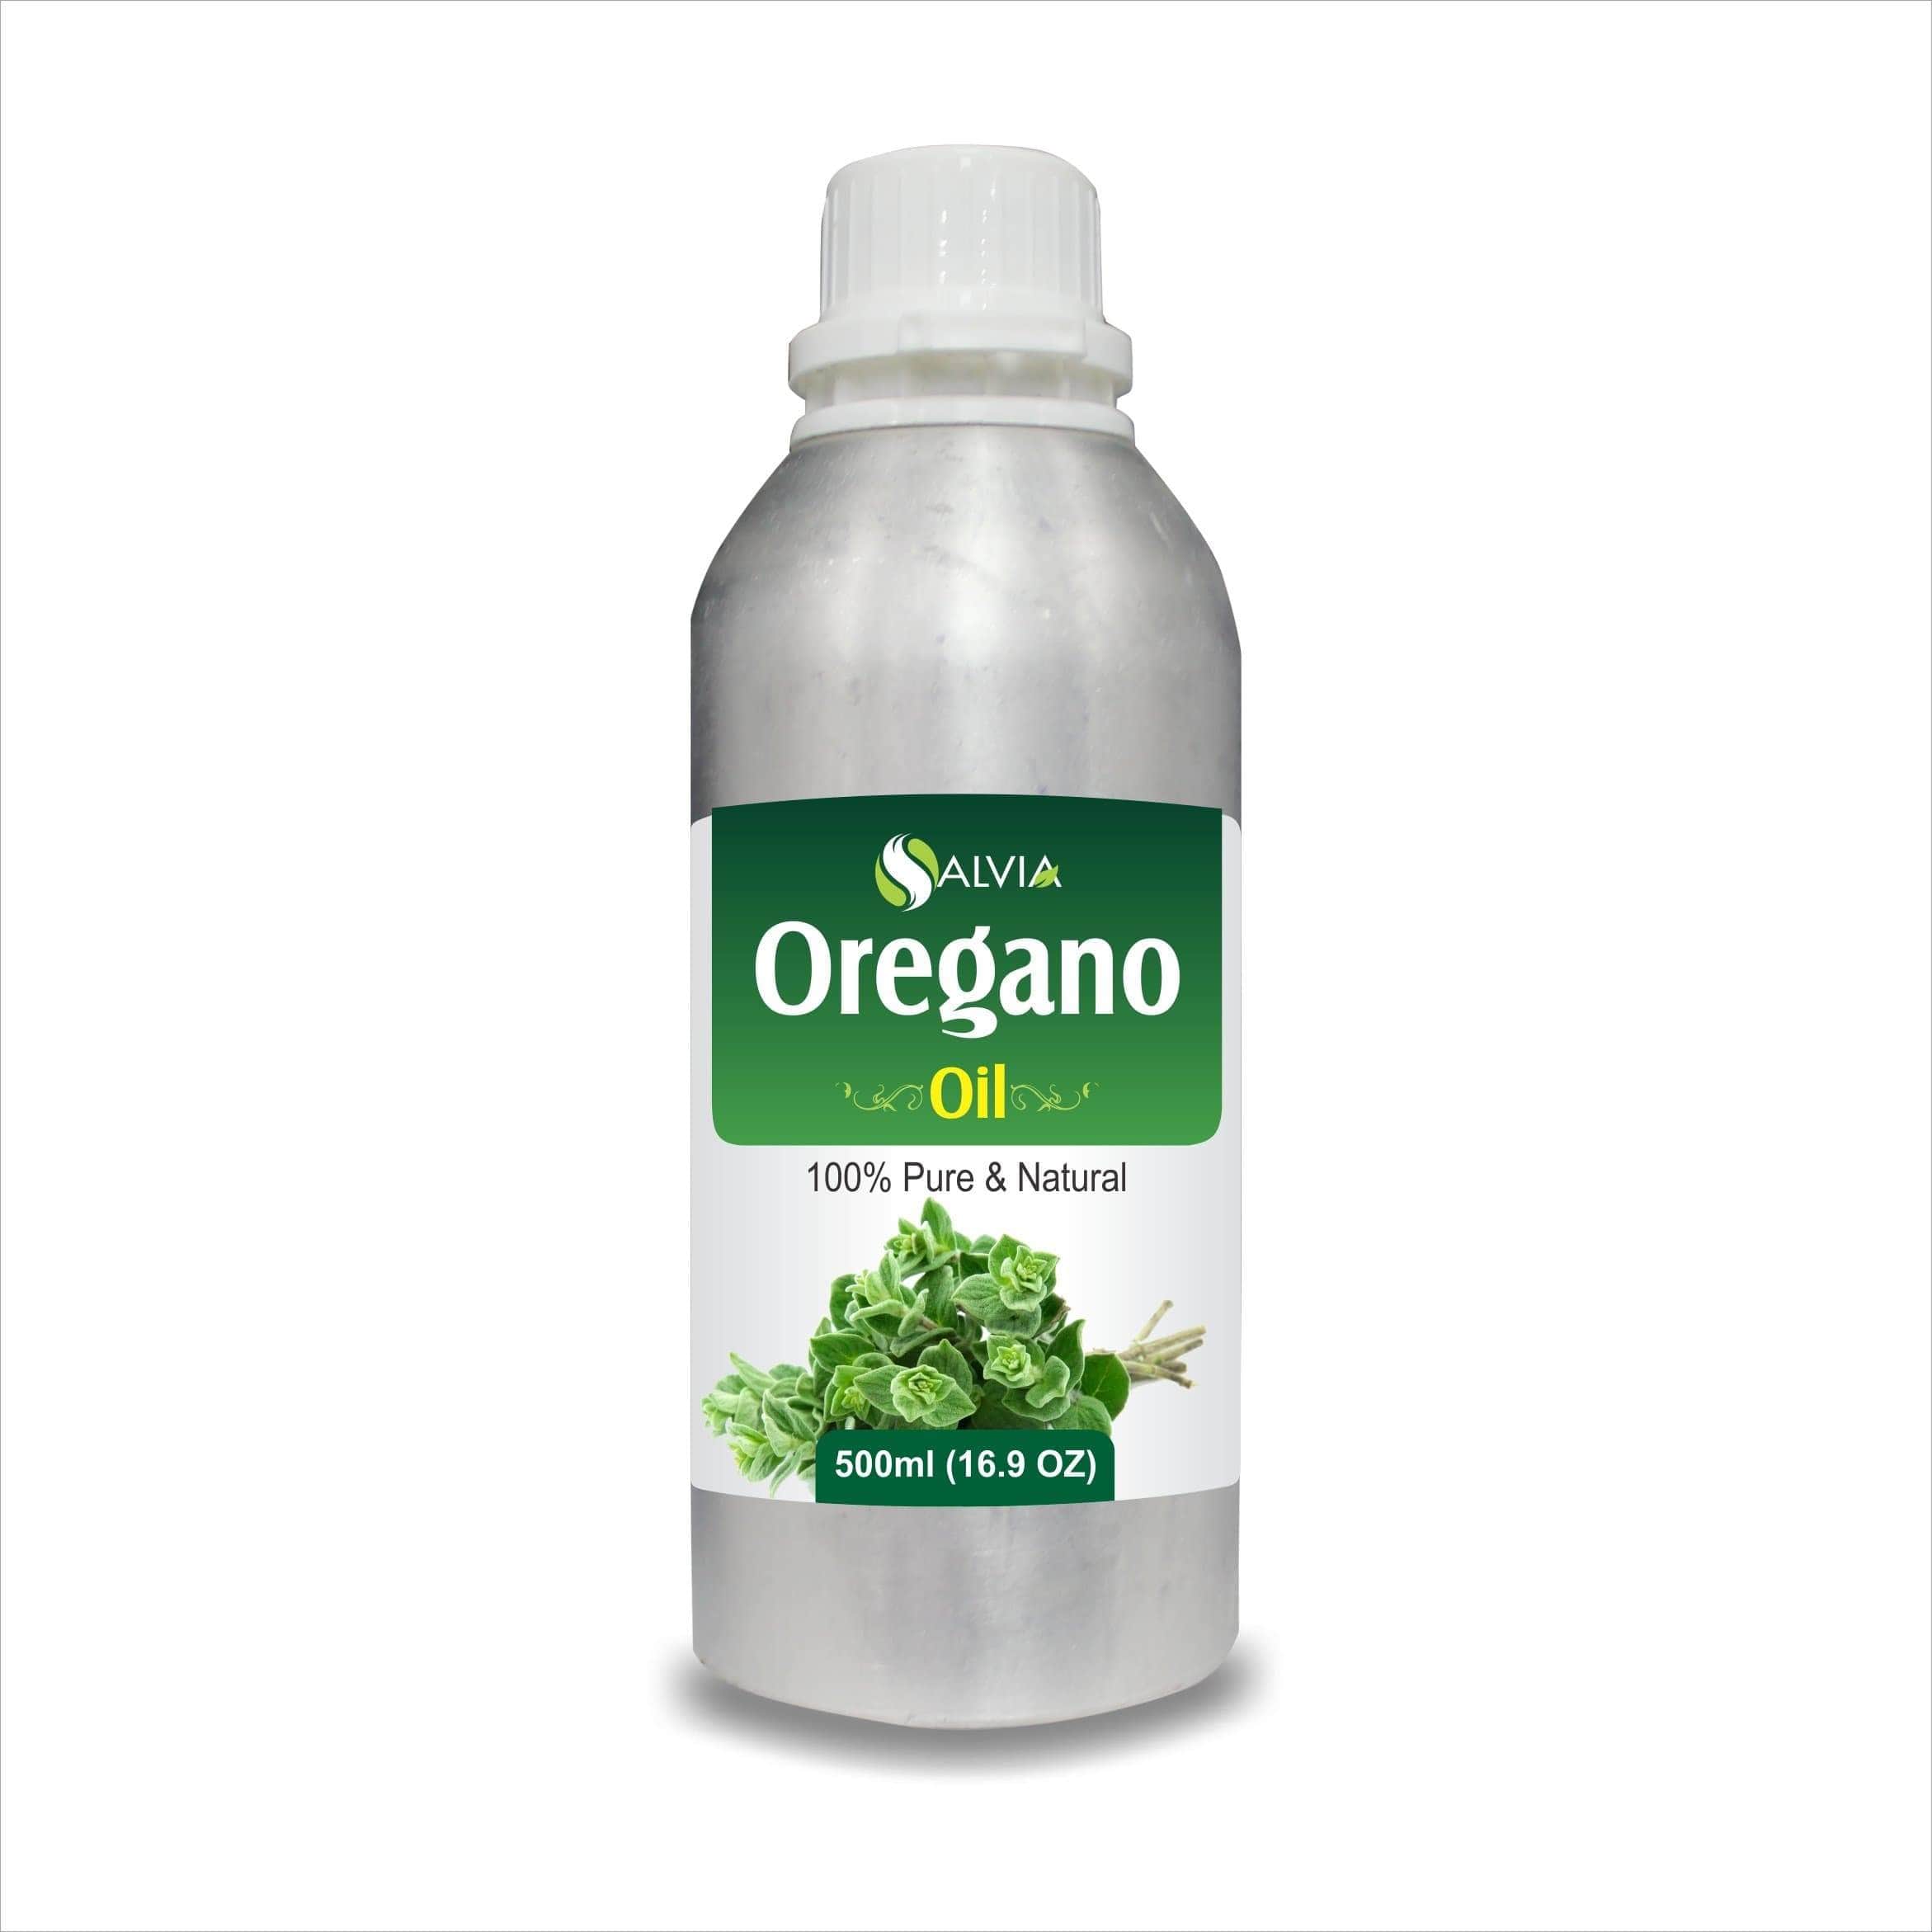 oregano oil benefits for skin